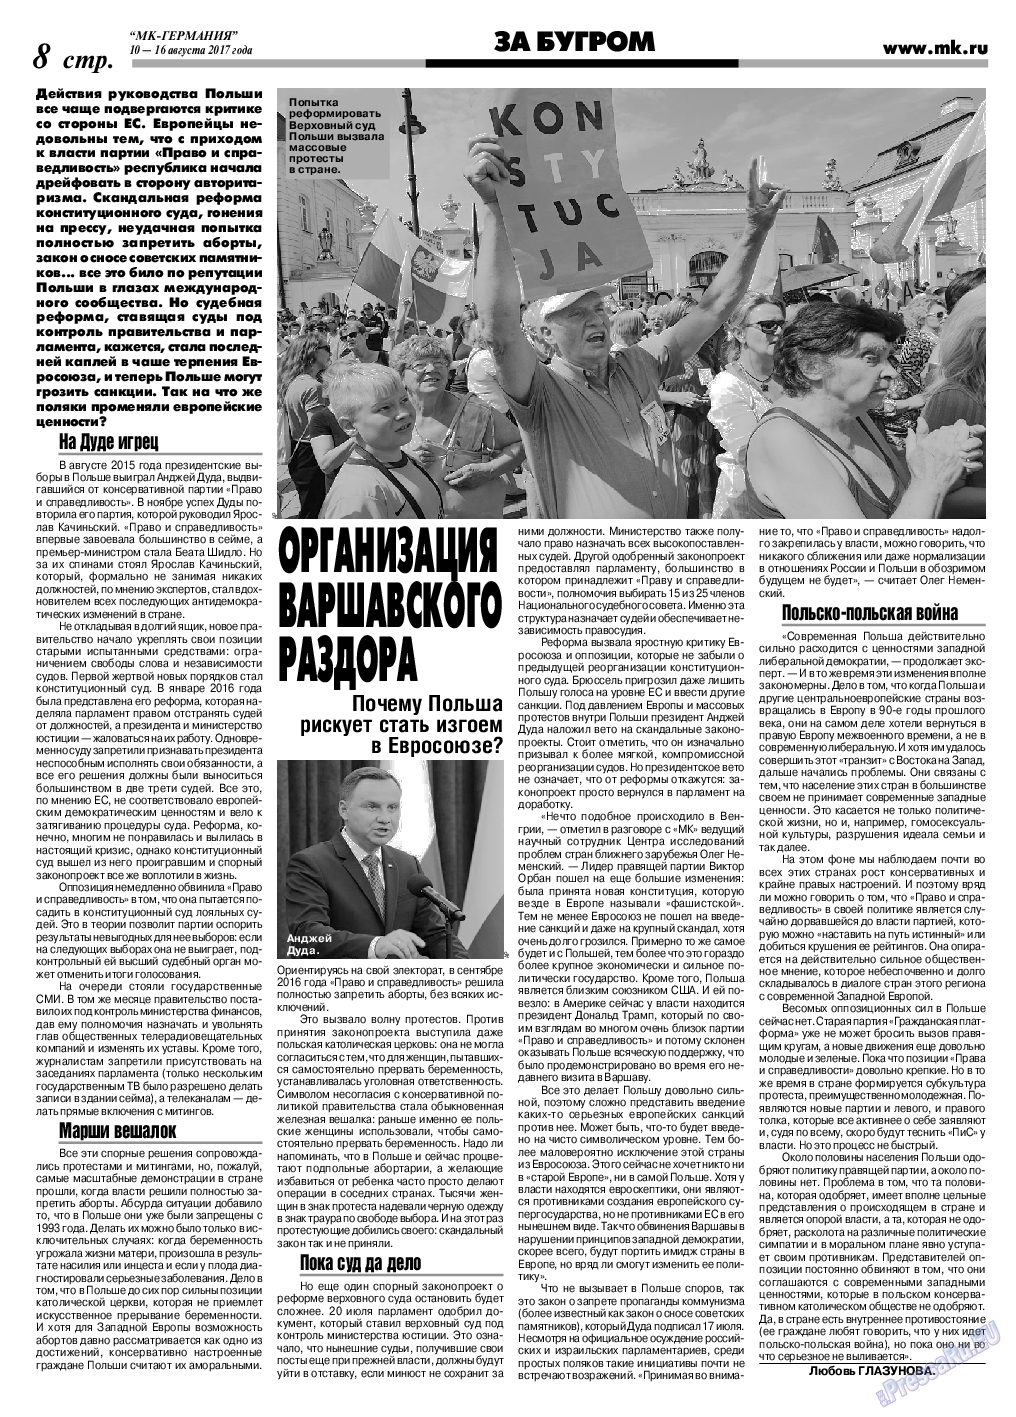 МК-Германия, газета. 2017 №33 стр.8